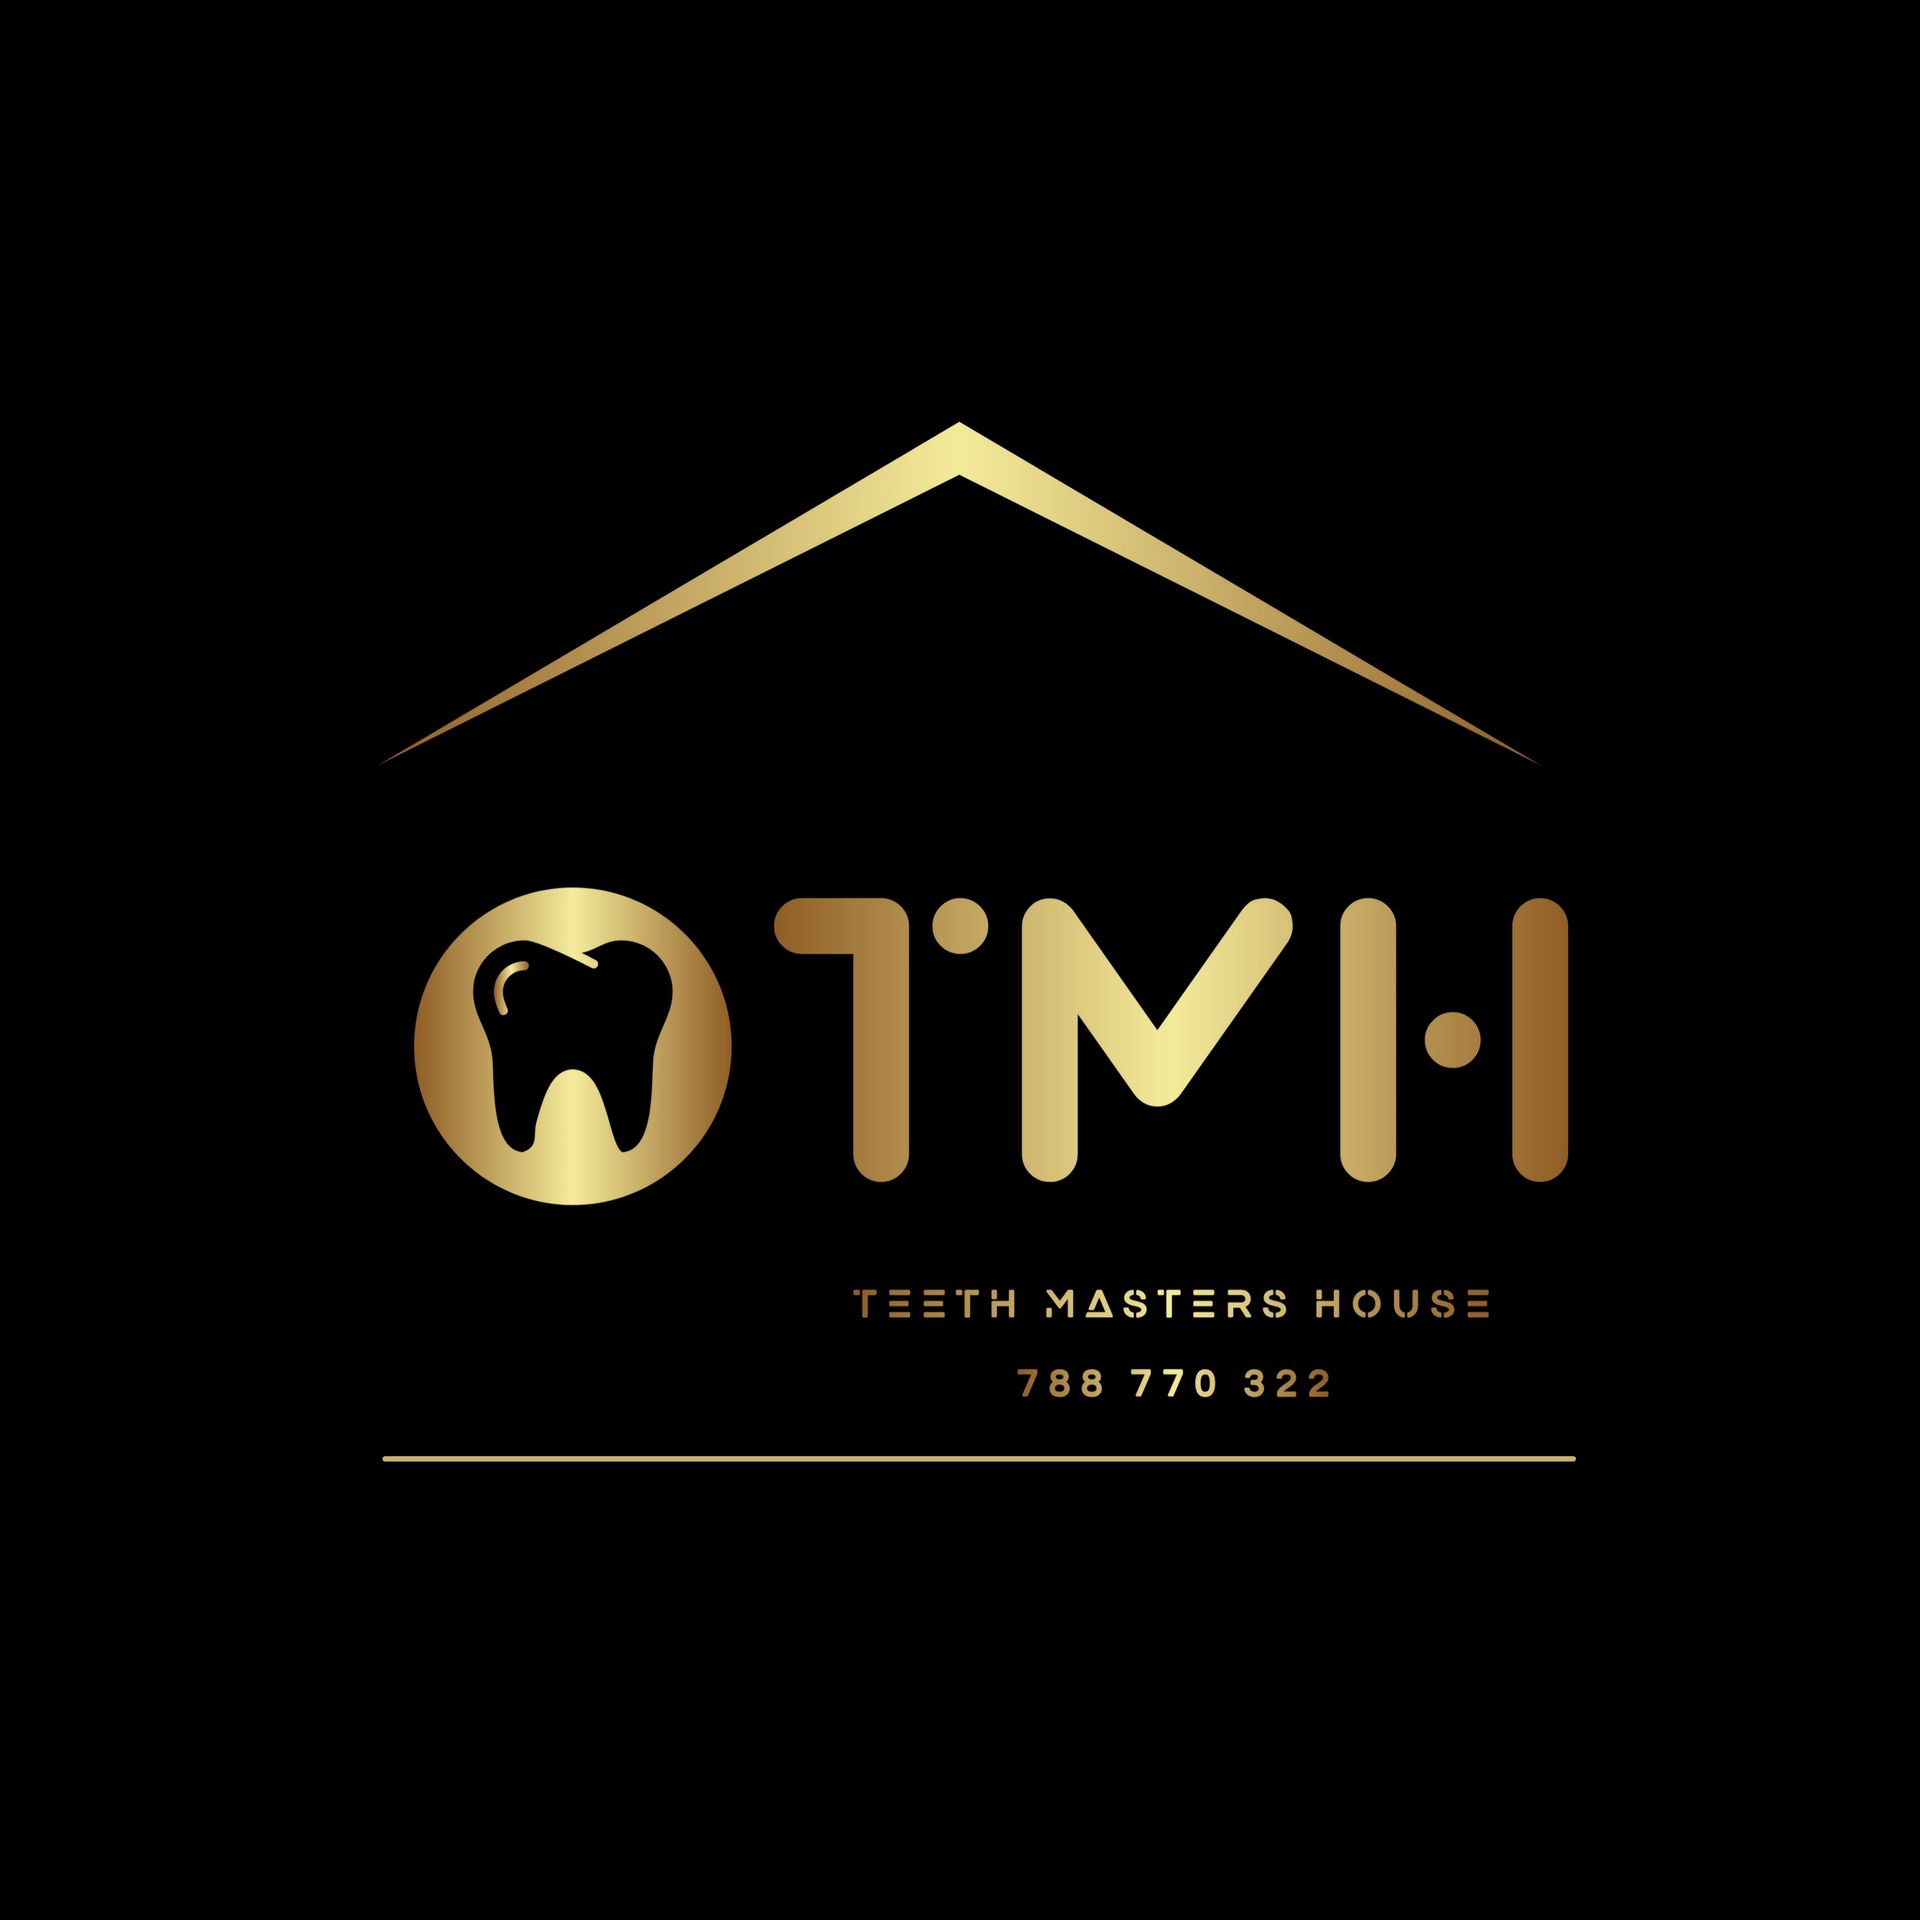 Logo Teeth Masters House Stomatologia Swarzędz Teeth Masters House ul. Wrzesińska 18